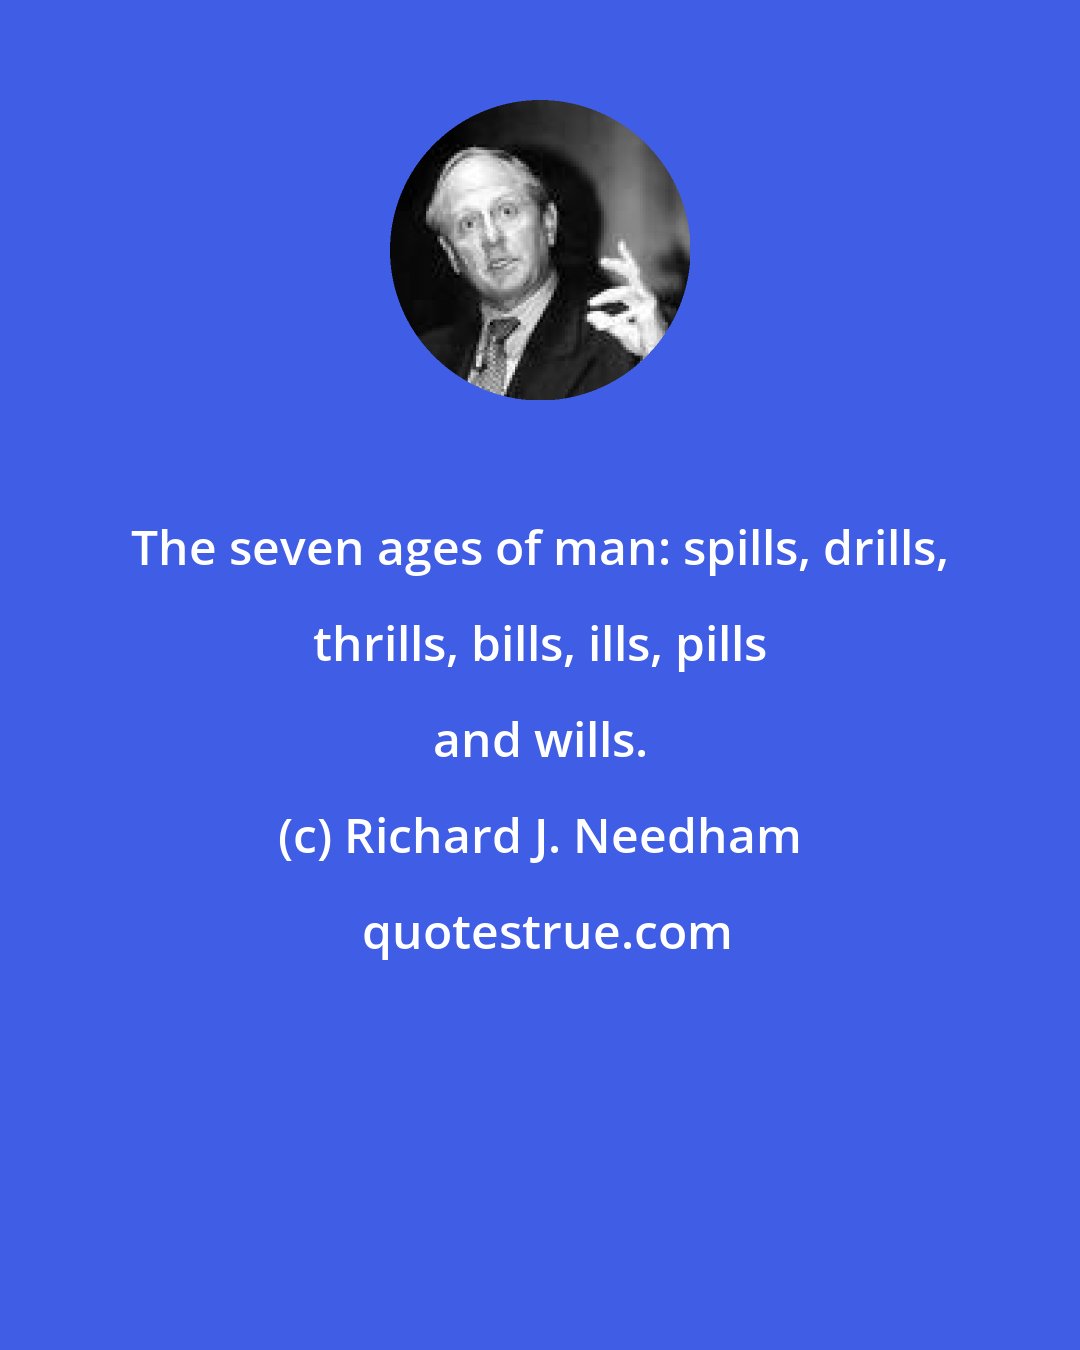 Richard J. Needham: The seven ages of man: spills, drills, thrills, bills, ills, pills and wills.